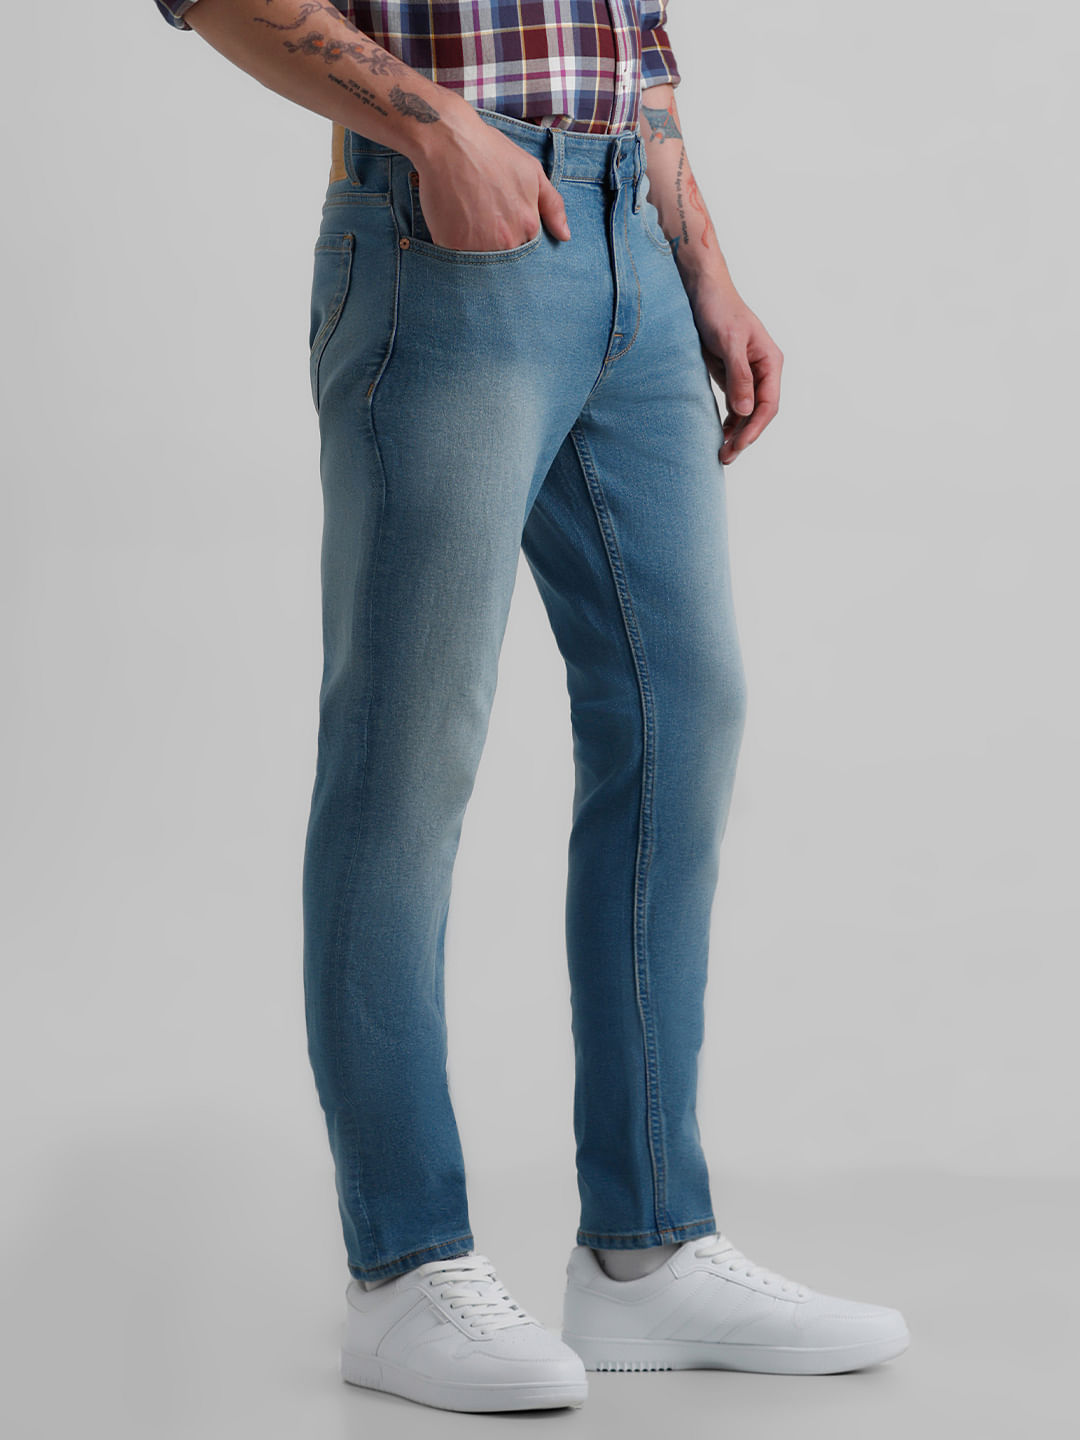 Buy Jeans Men Pants Casual Cotton Denim Trousers Multi Pocket Cargo Jeans  Men Blue 3XLarge at Amazonin